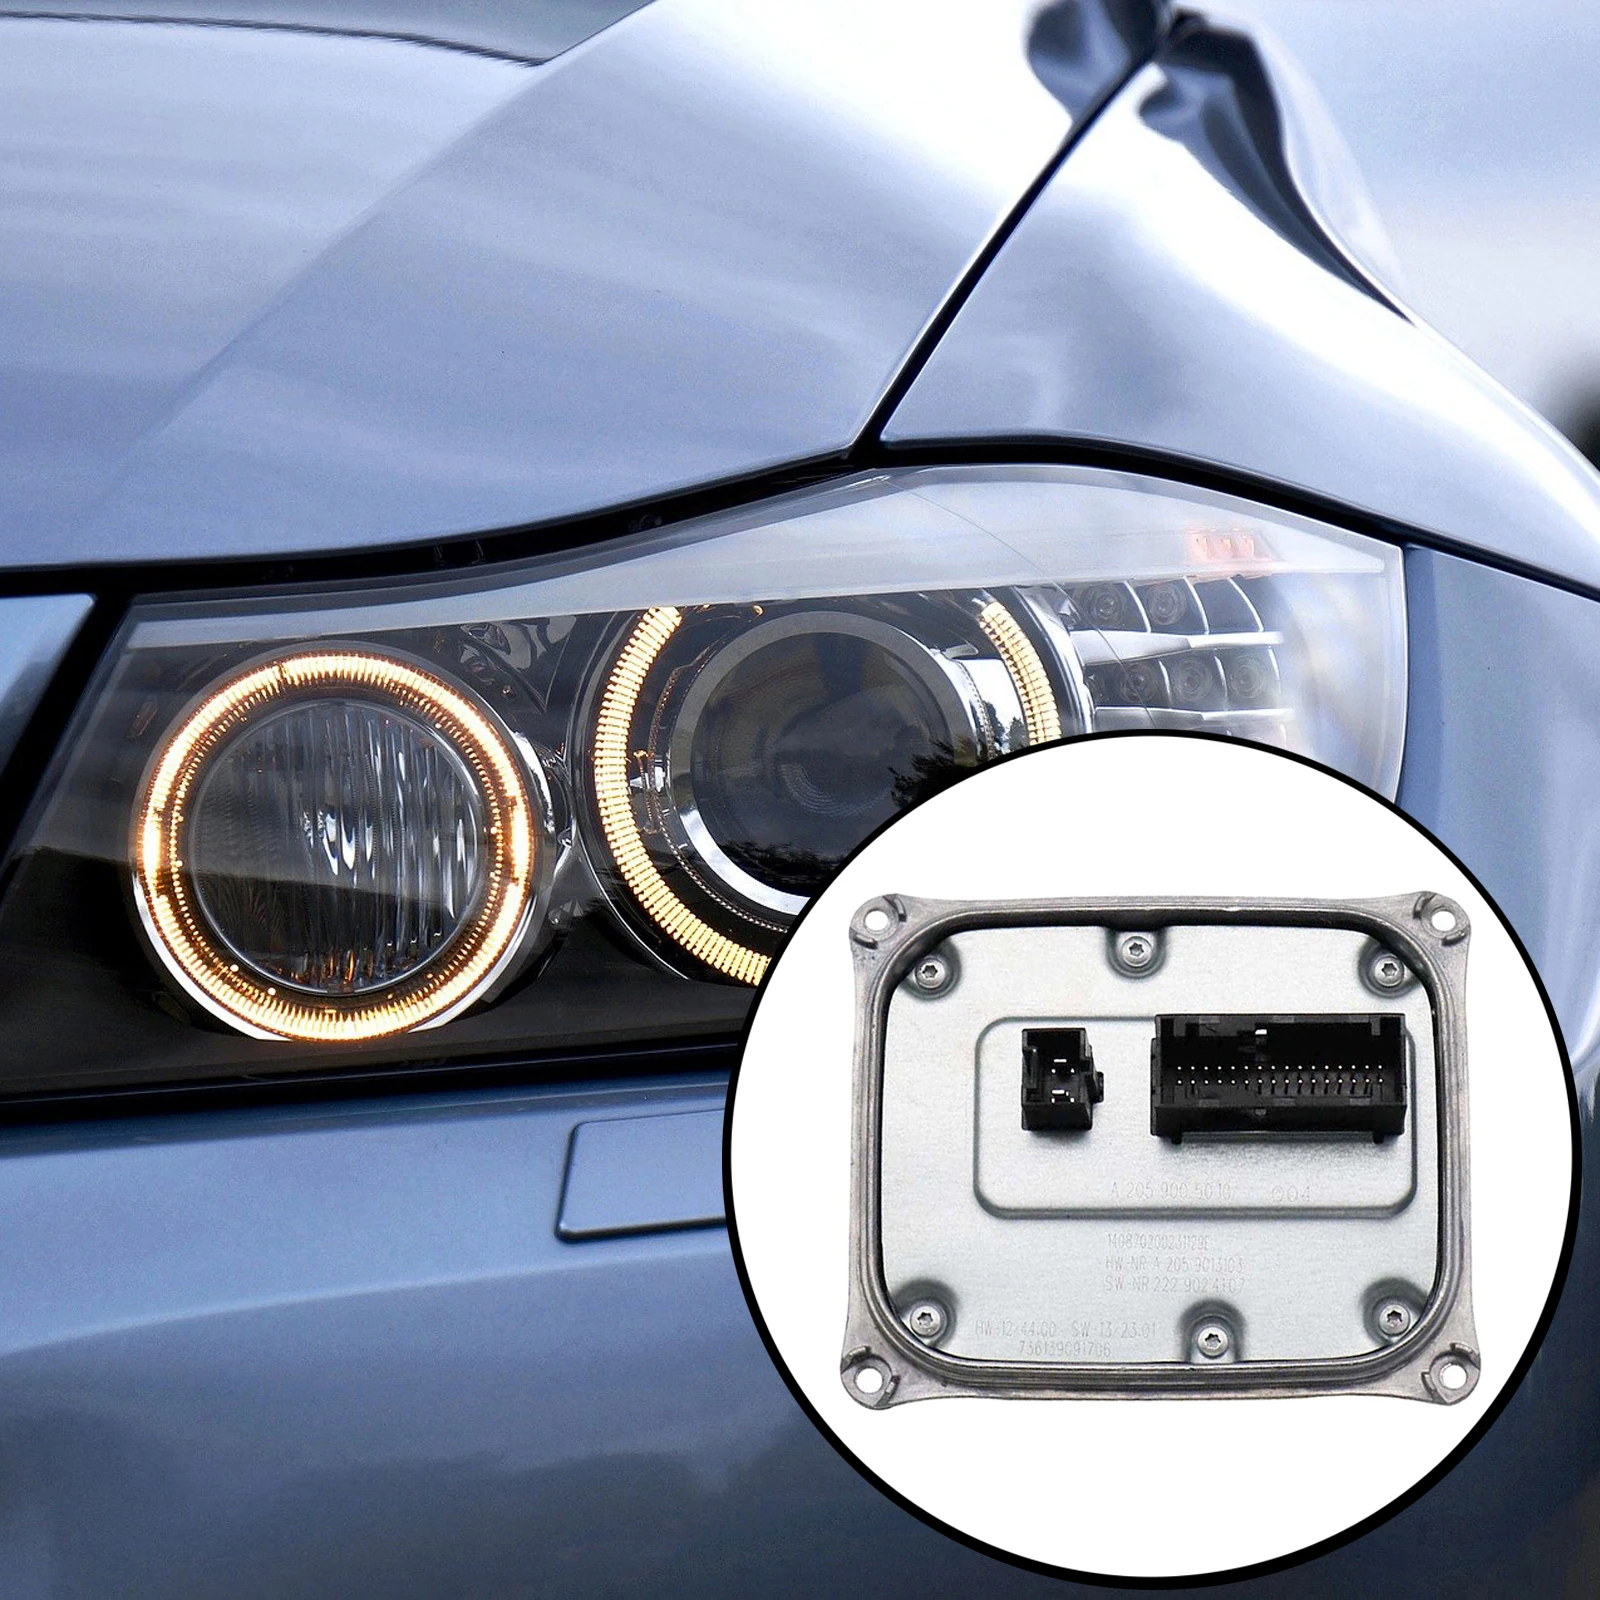 A2229008005 LED Headlight Control Unit Ballast OEM For Mercedes Parts Accessories Car Truck Parts Lighting